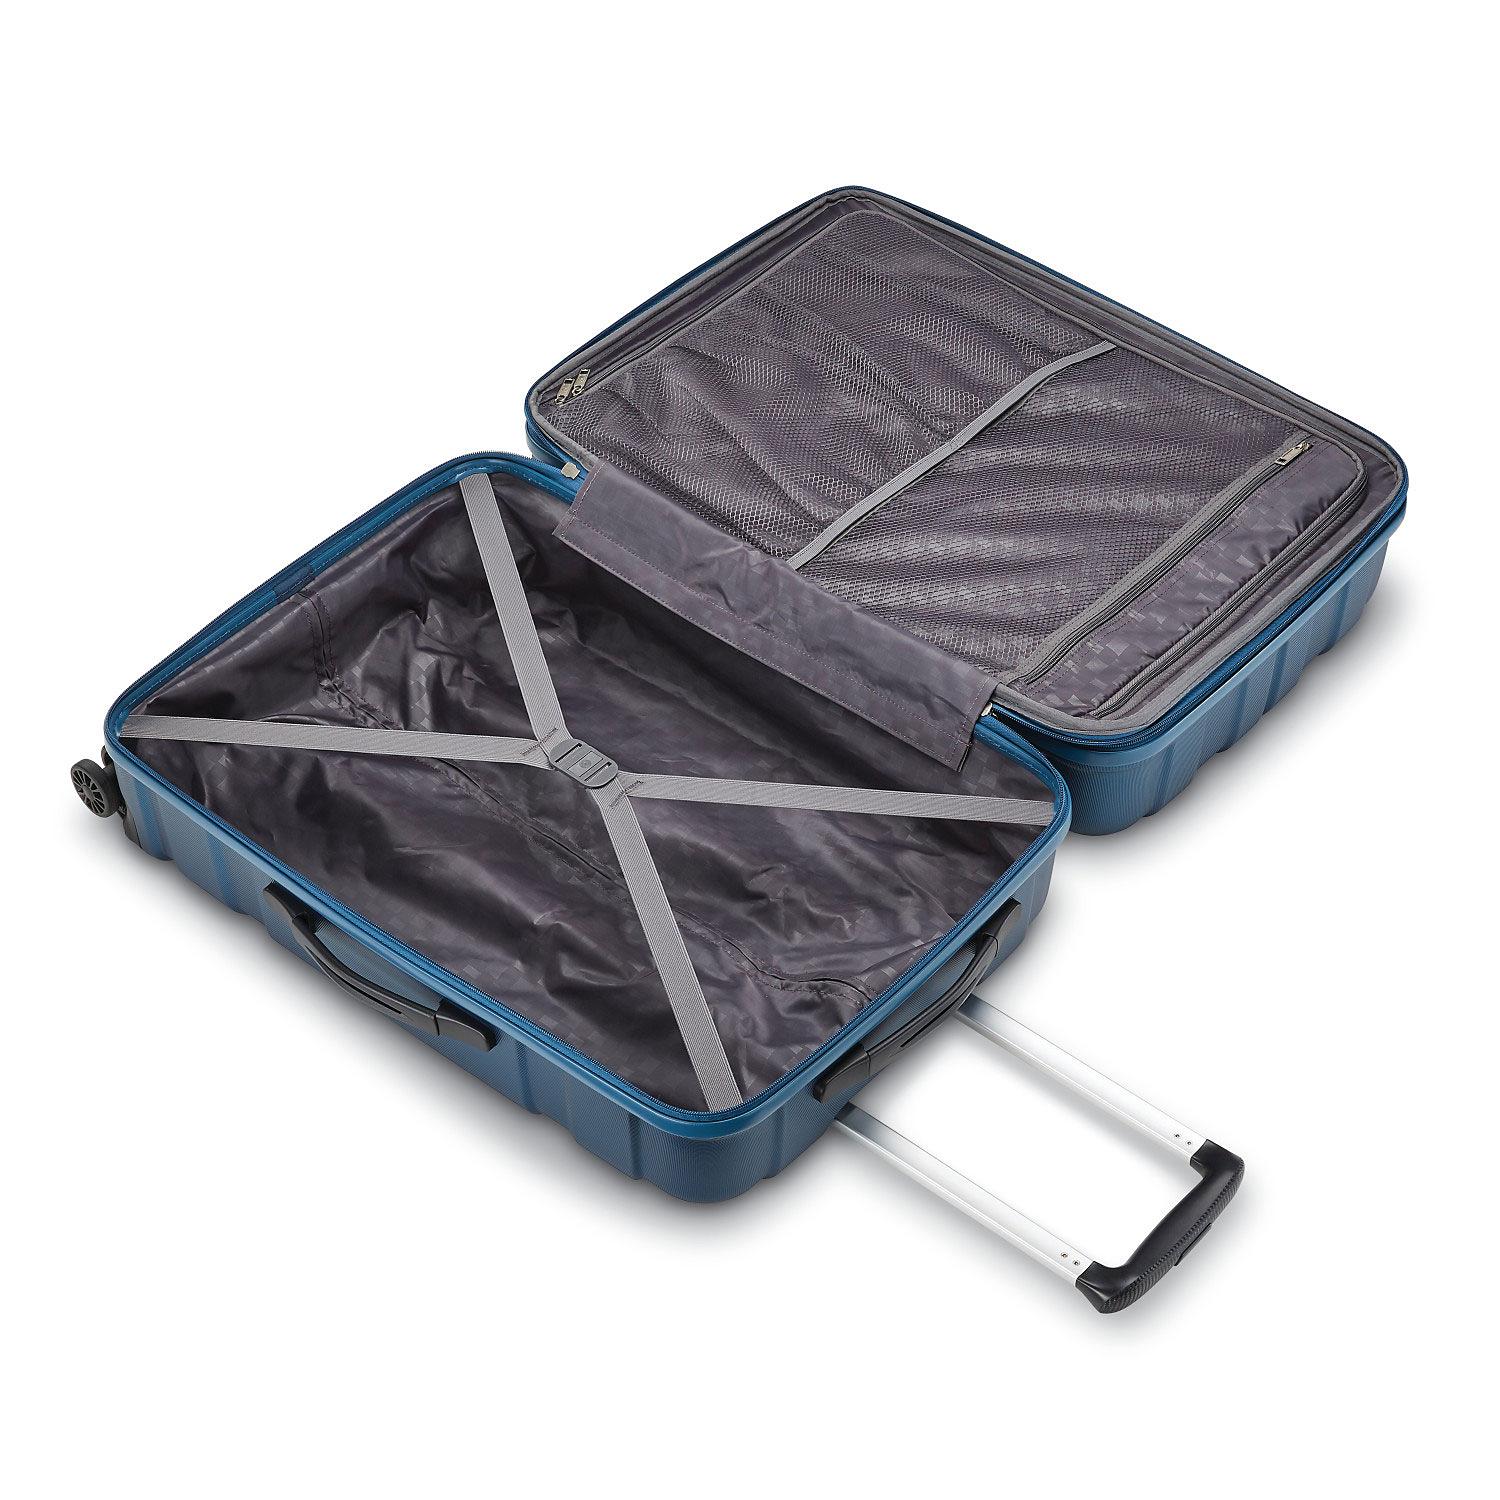 Samsonite Belmont DLX 2-Piece Hardside Luggage Set - Lagoon Blue | eBay